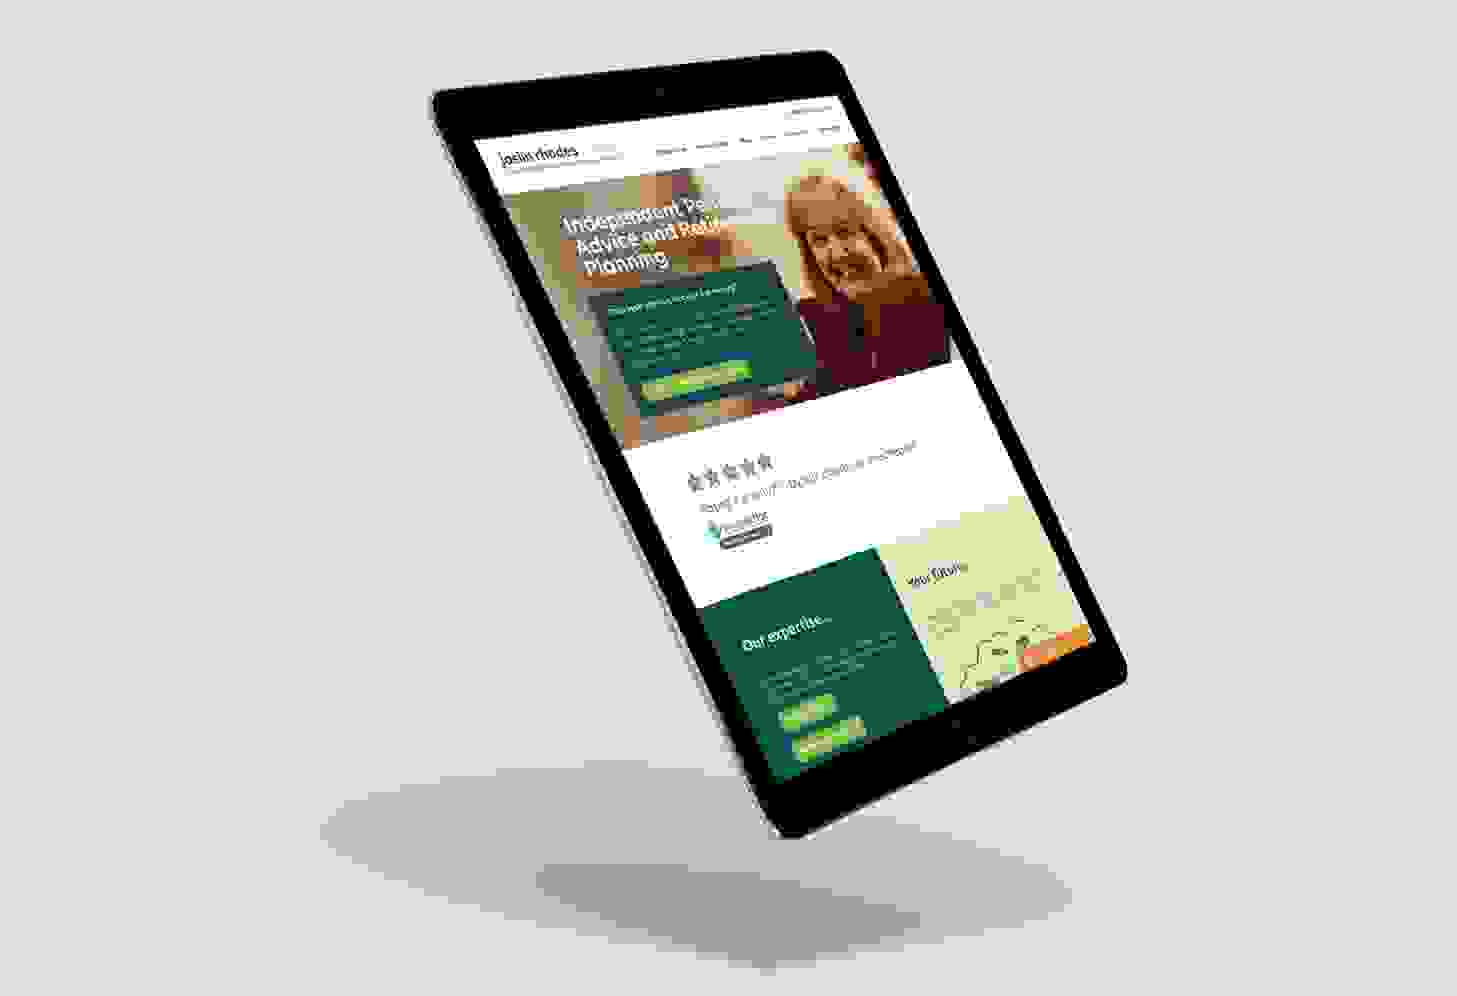 Joslin Rhodes website being displayed on an iPad